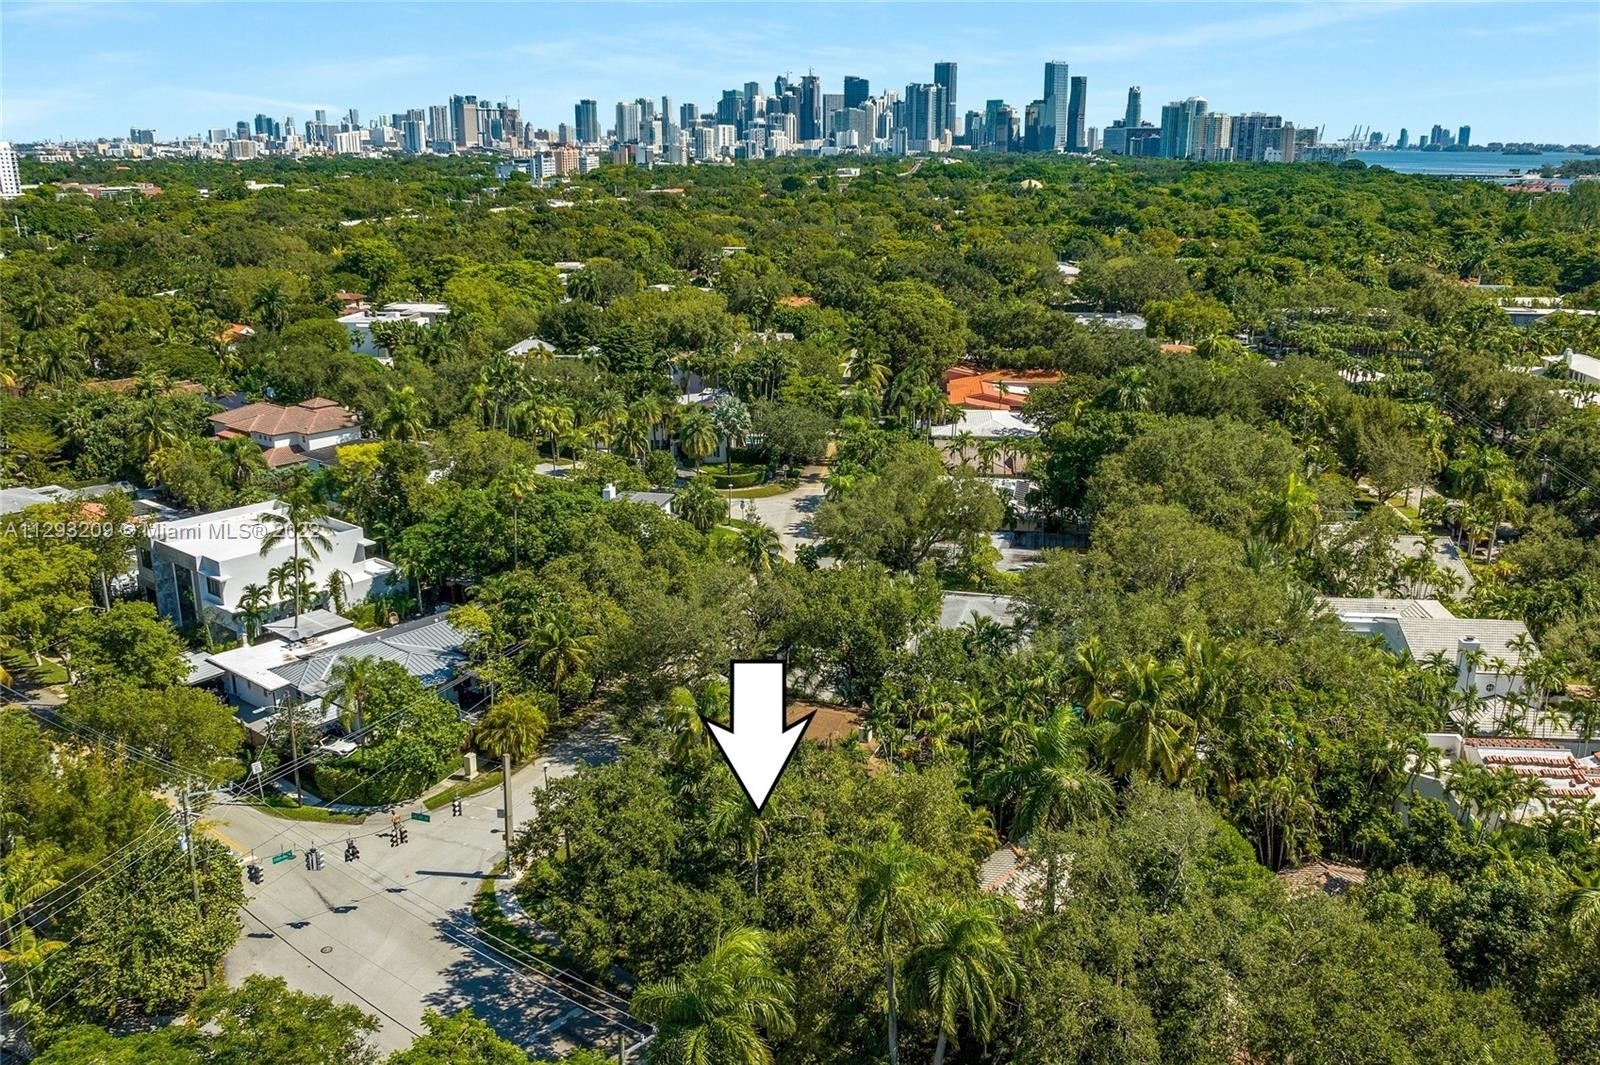 Property at Northeast Coconut Grove, Miami, Florida 33133